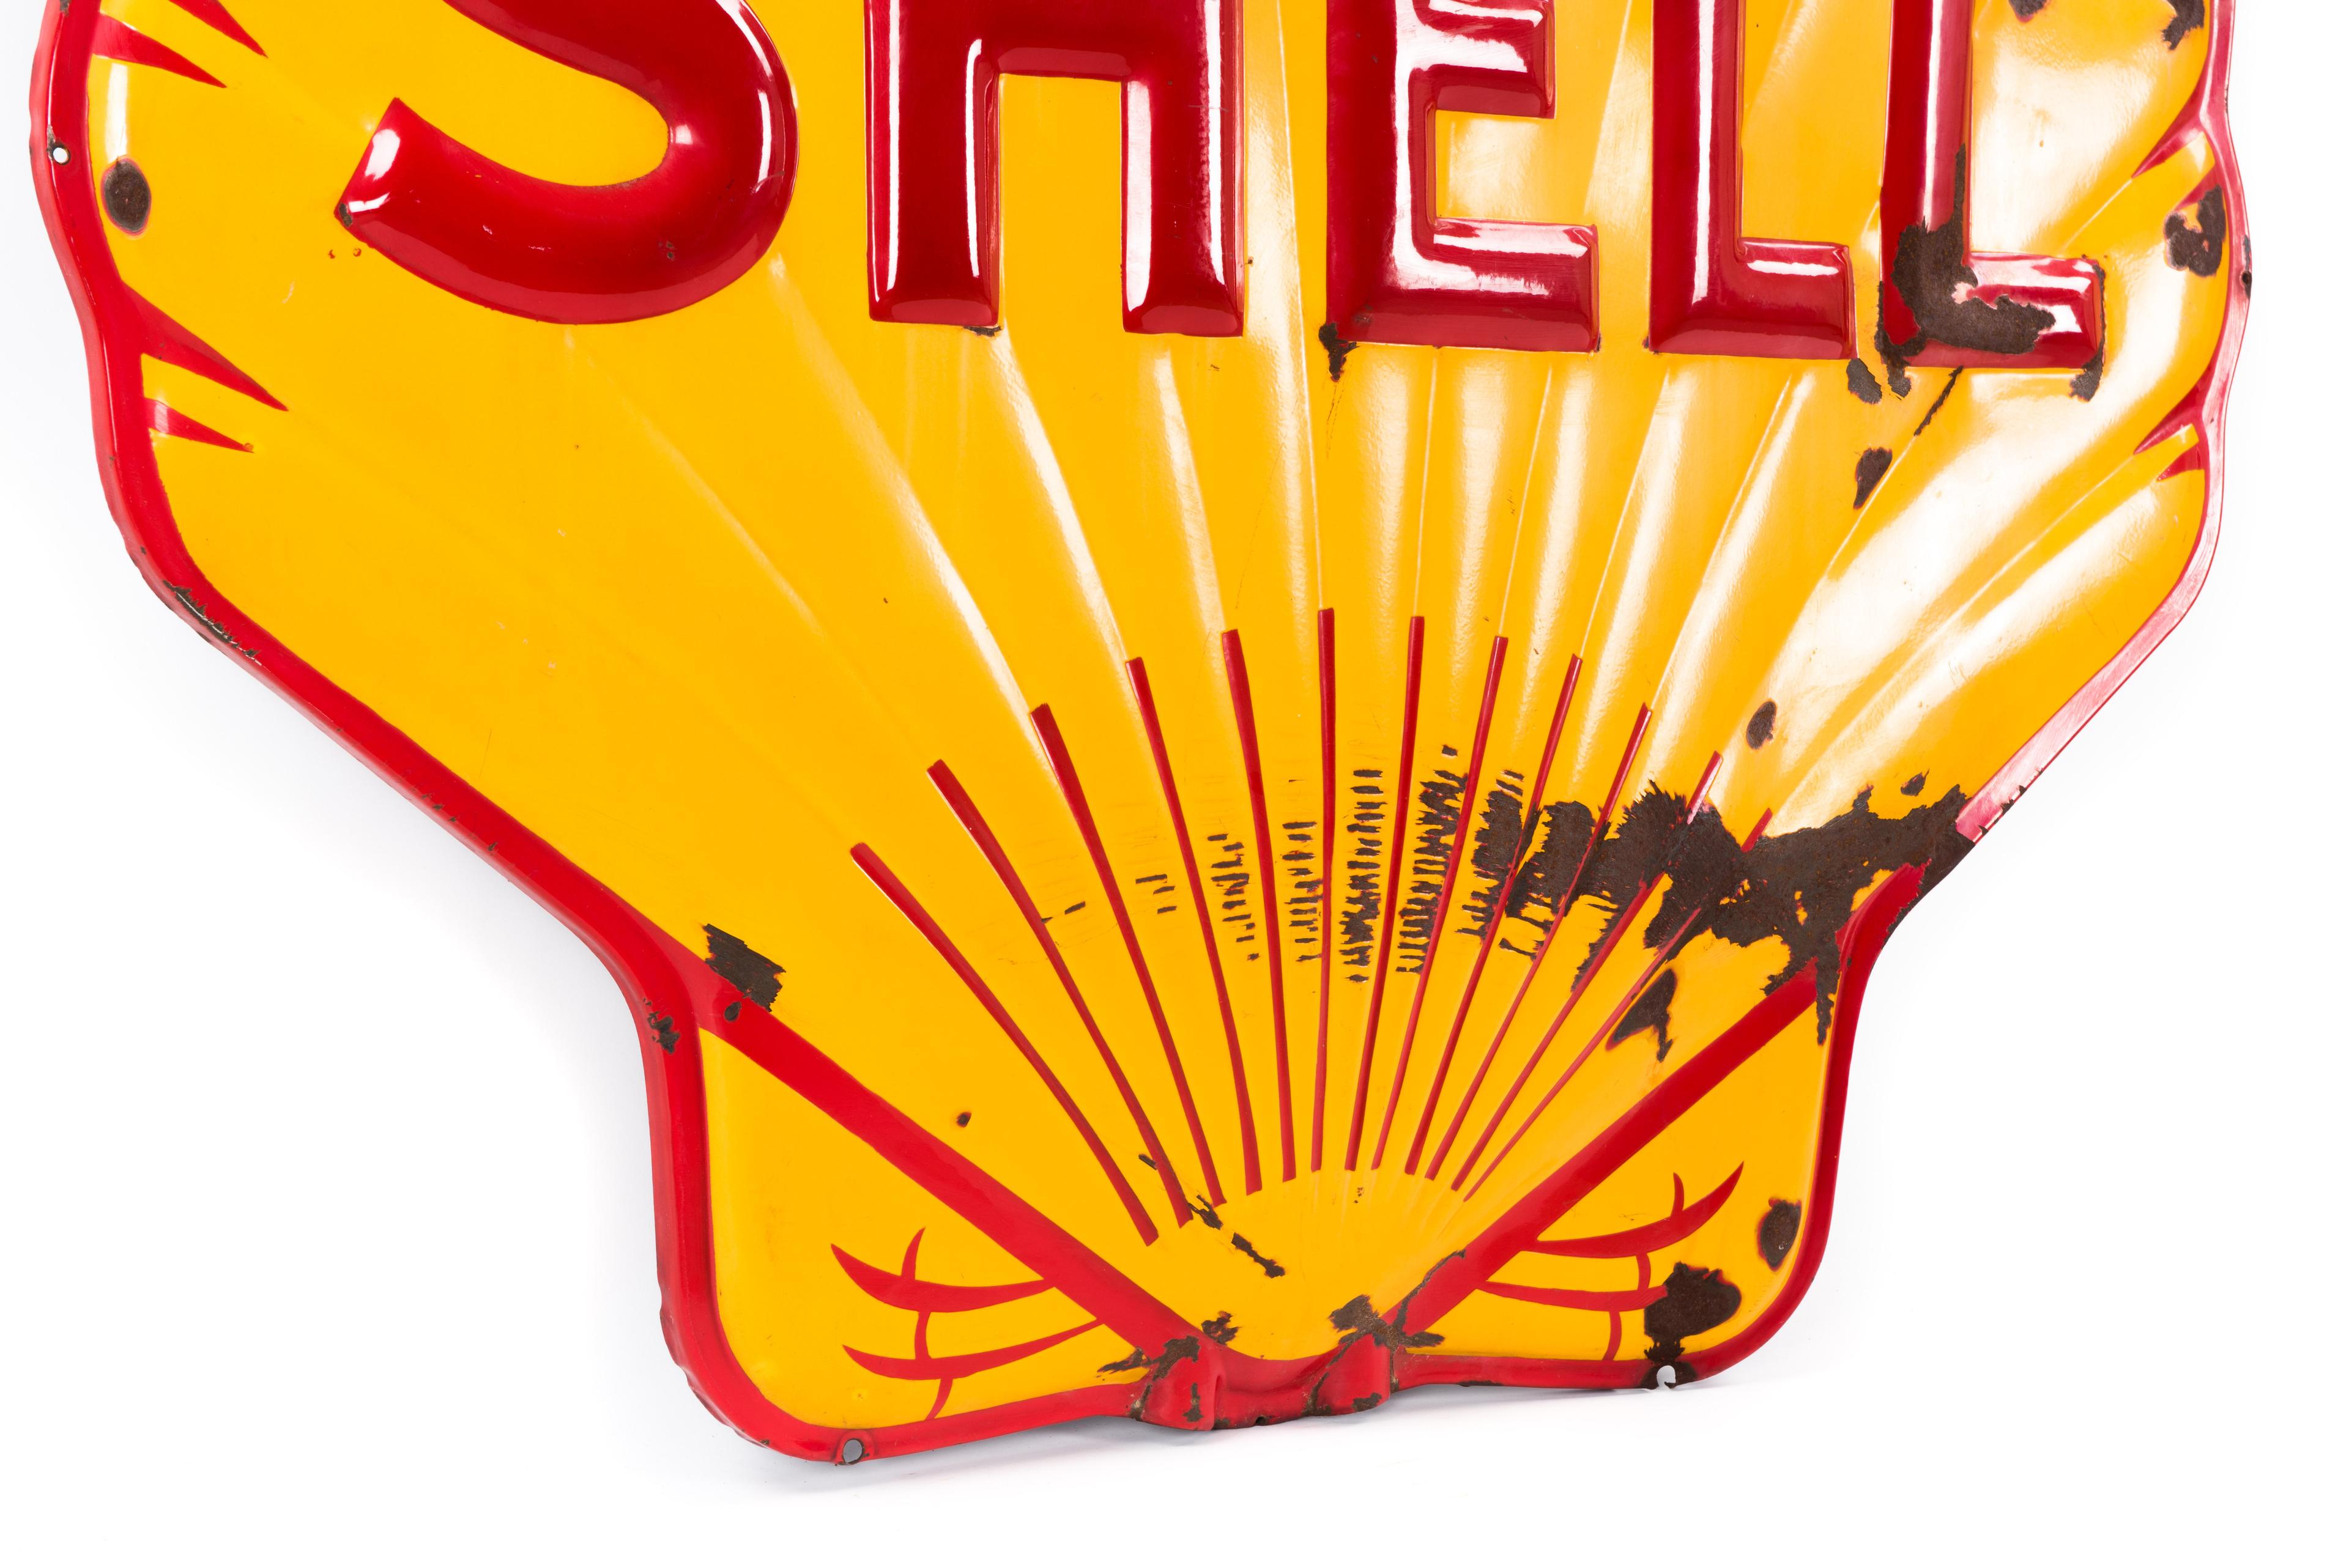 Shell Embossed Porcelain Neon Sign Panel